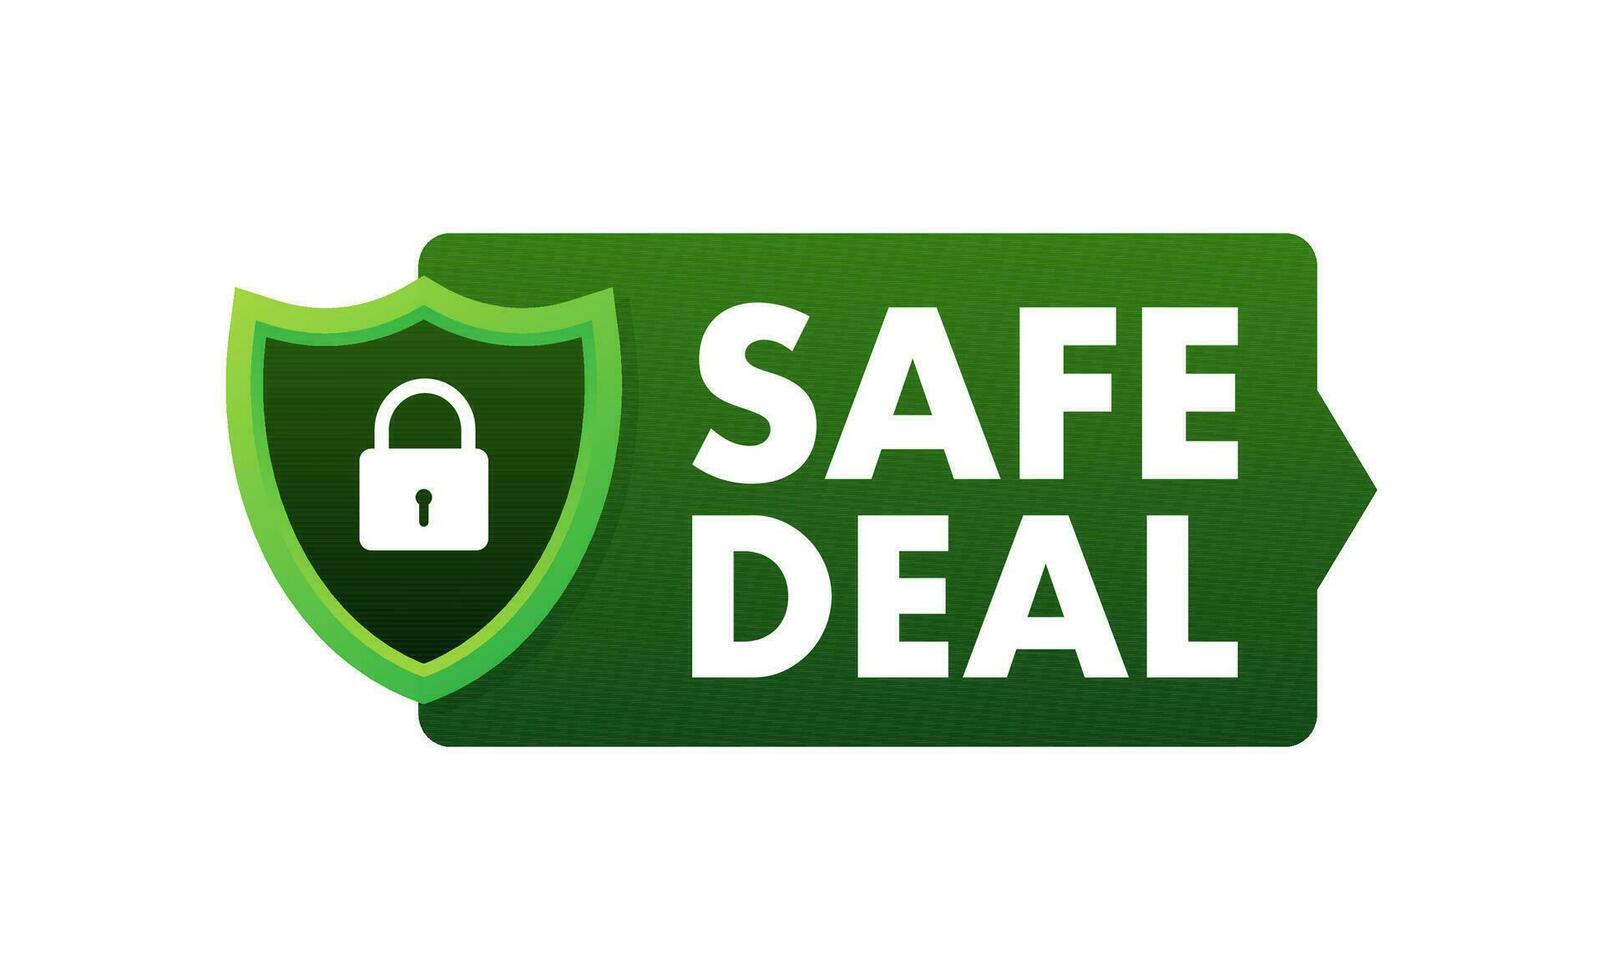 Safe deal. Check mark icon. International agreement. Vector stock illustration